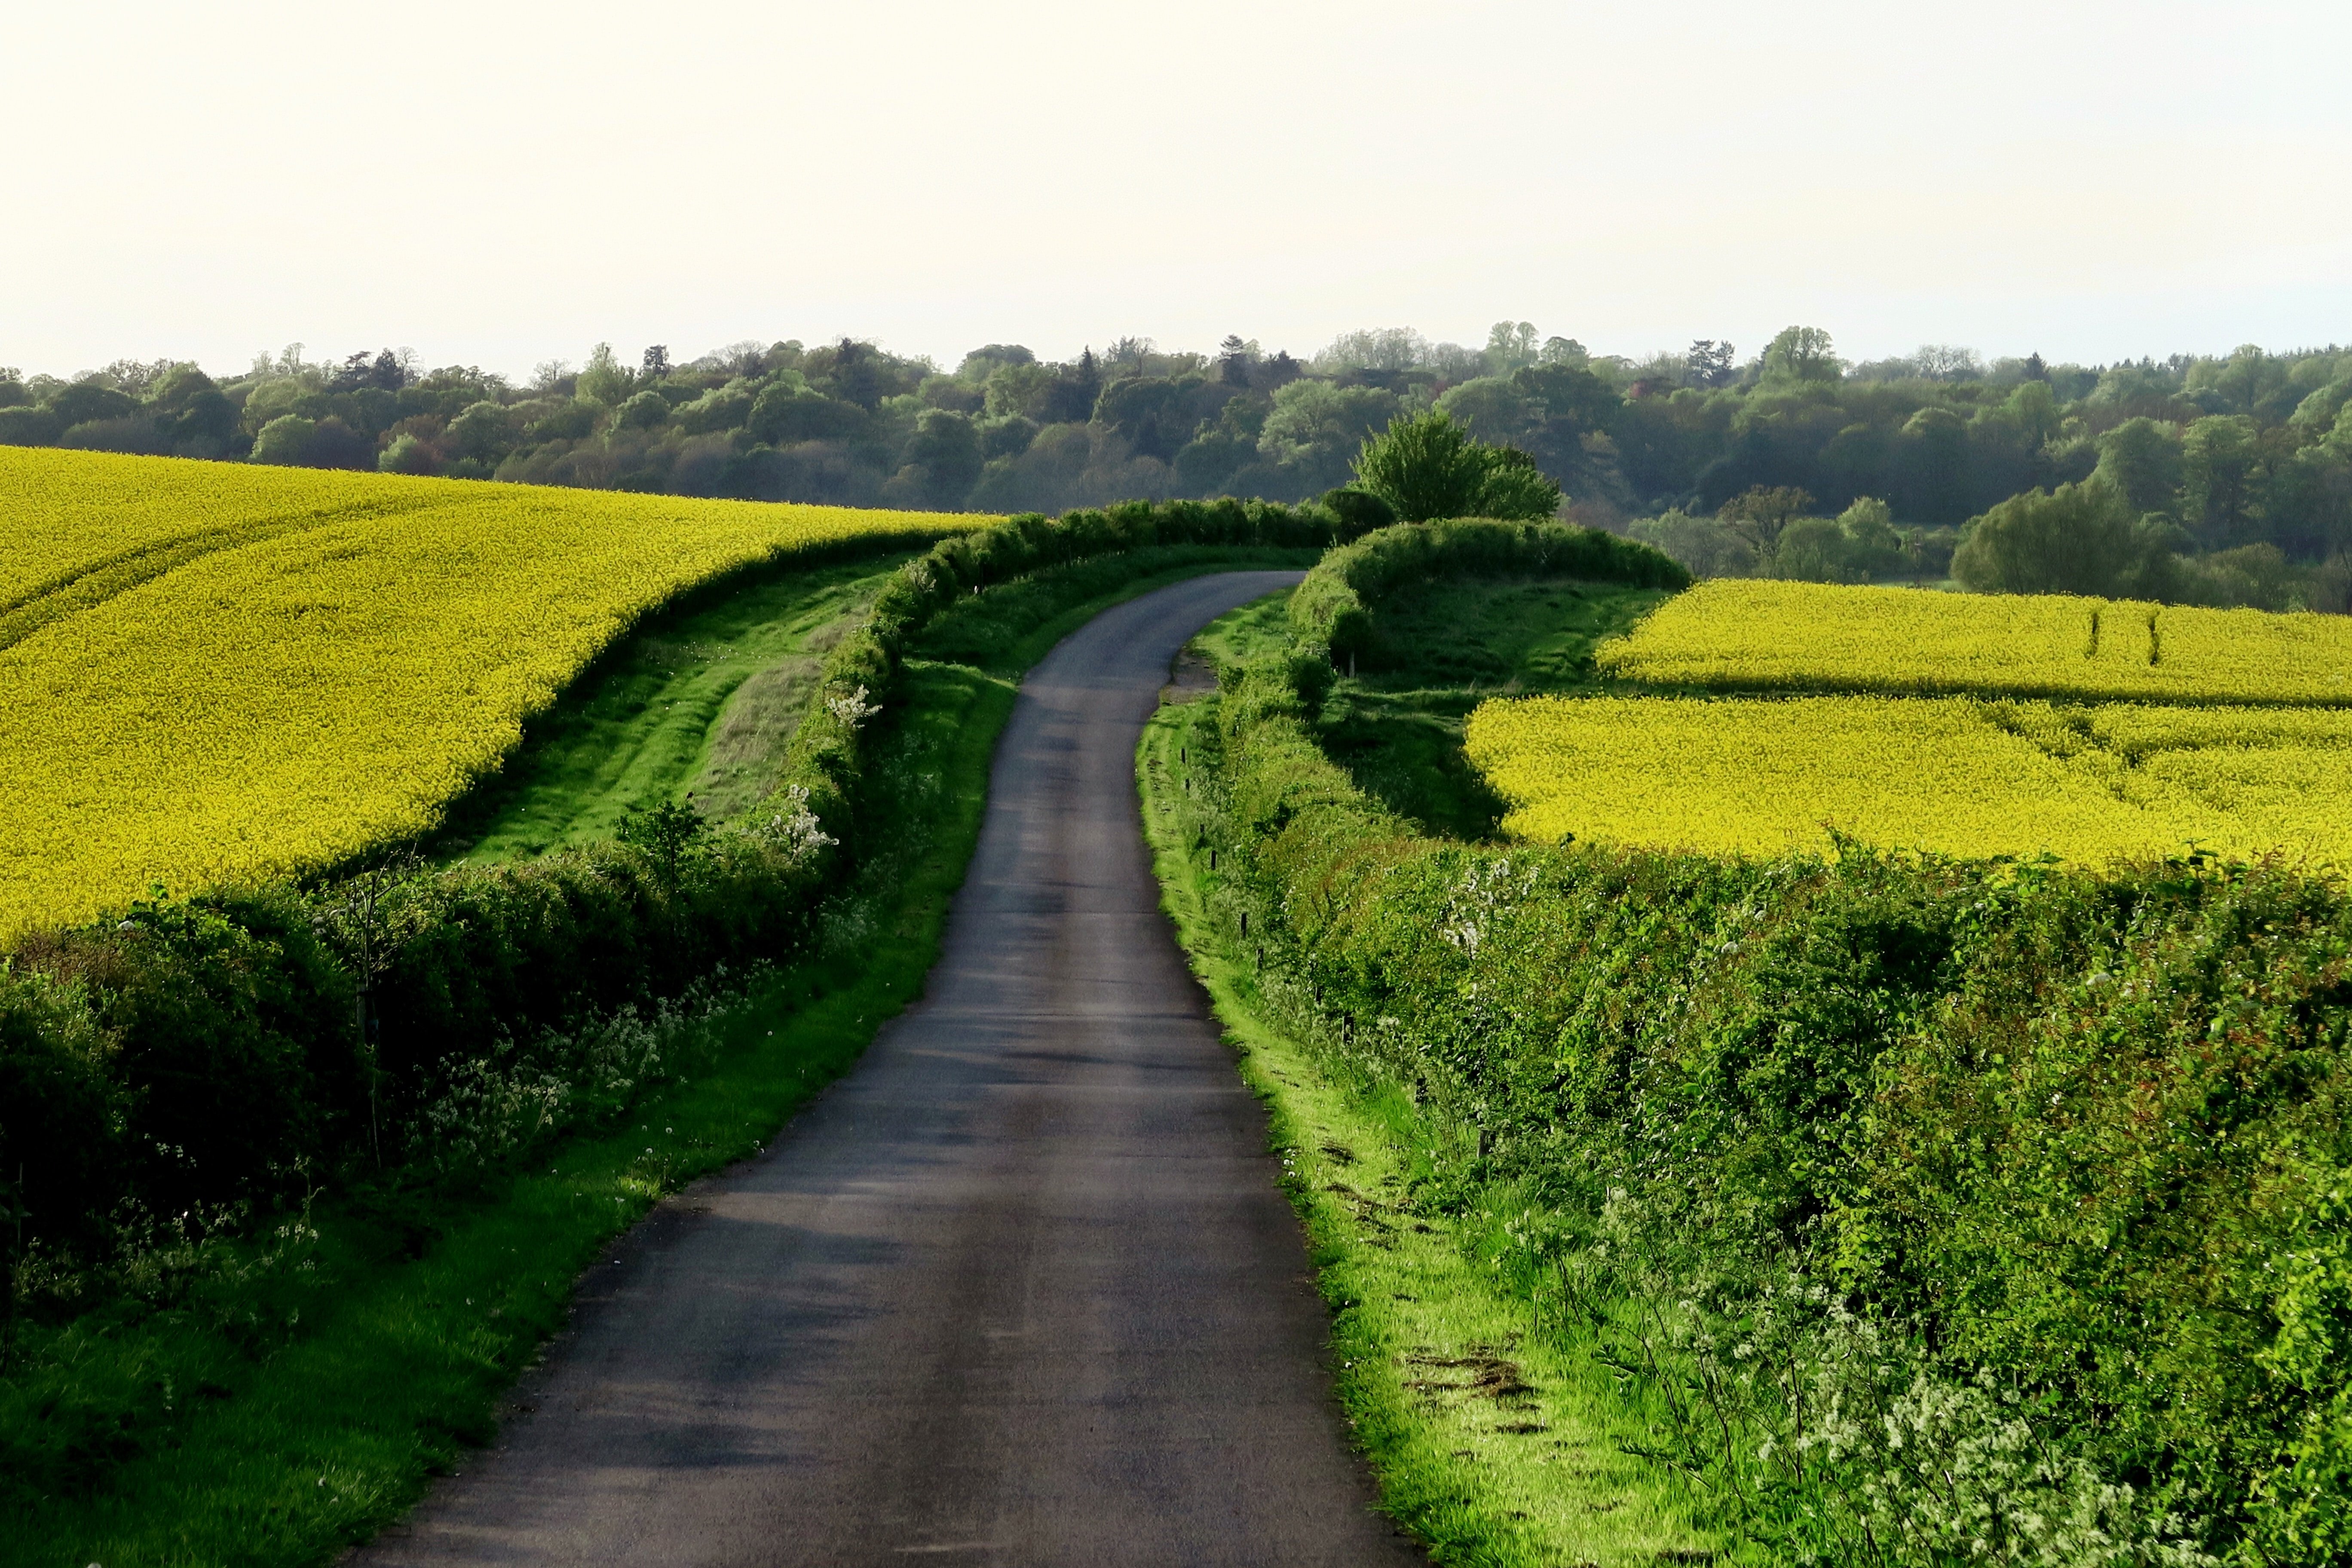 A country road | Source: Unsplash.com